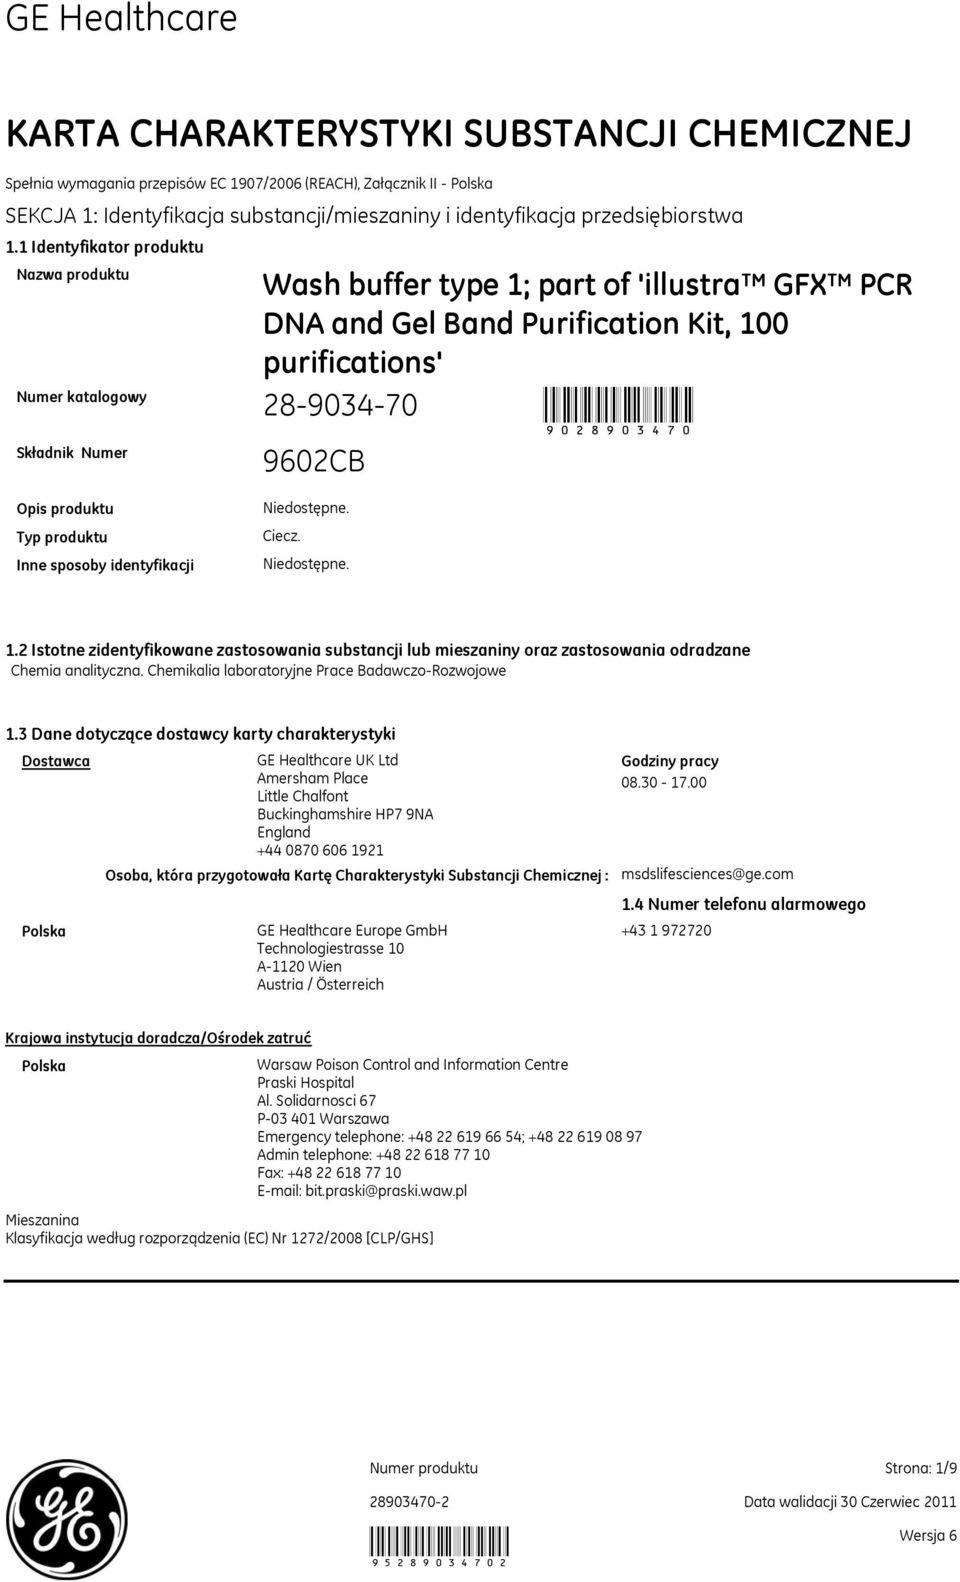 1 Identyfikator produktu Nazwa produktu Numer katalogowy Składnik Numer Wash buffer type 1; part of 'illustra GFX PCR DNA and Gel Band Purification Kit, 100 purifications' 28903470 9028903470 9602CB